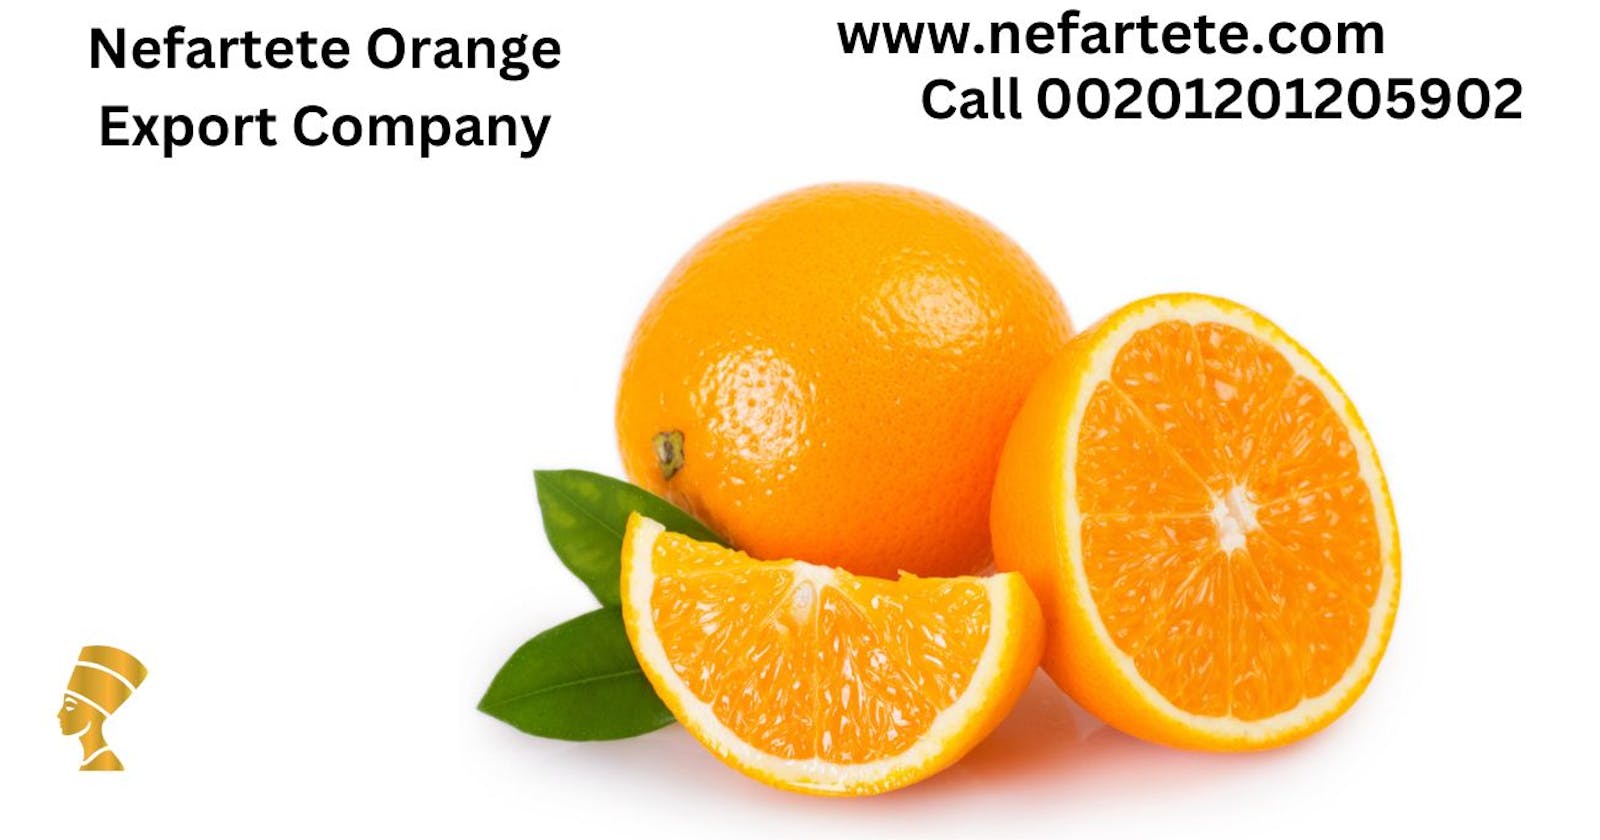 Nefartete orange exporter